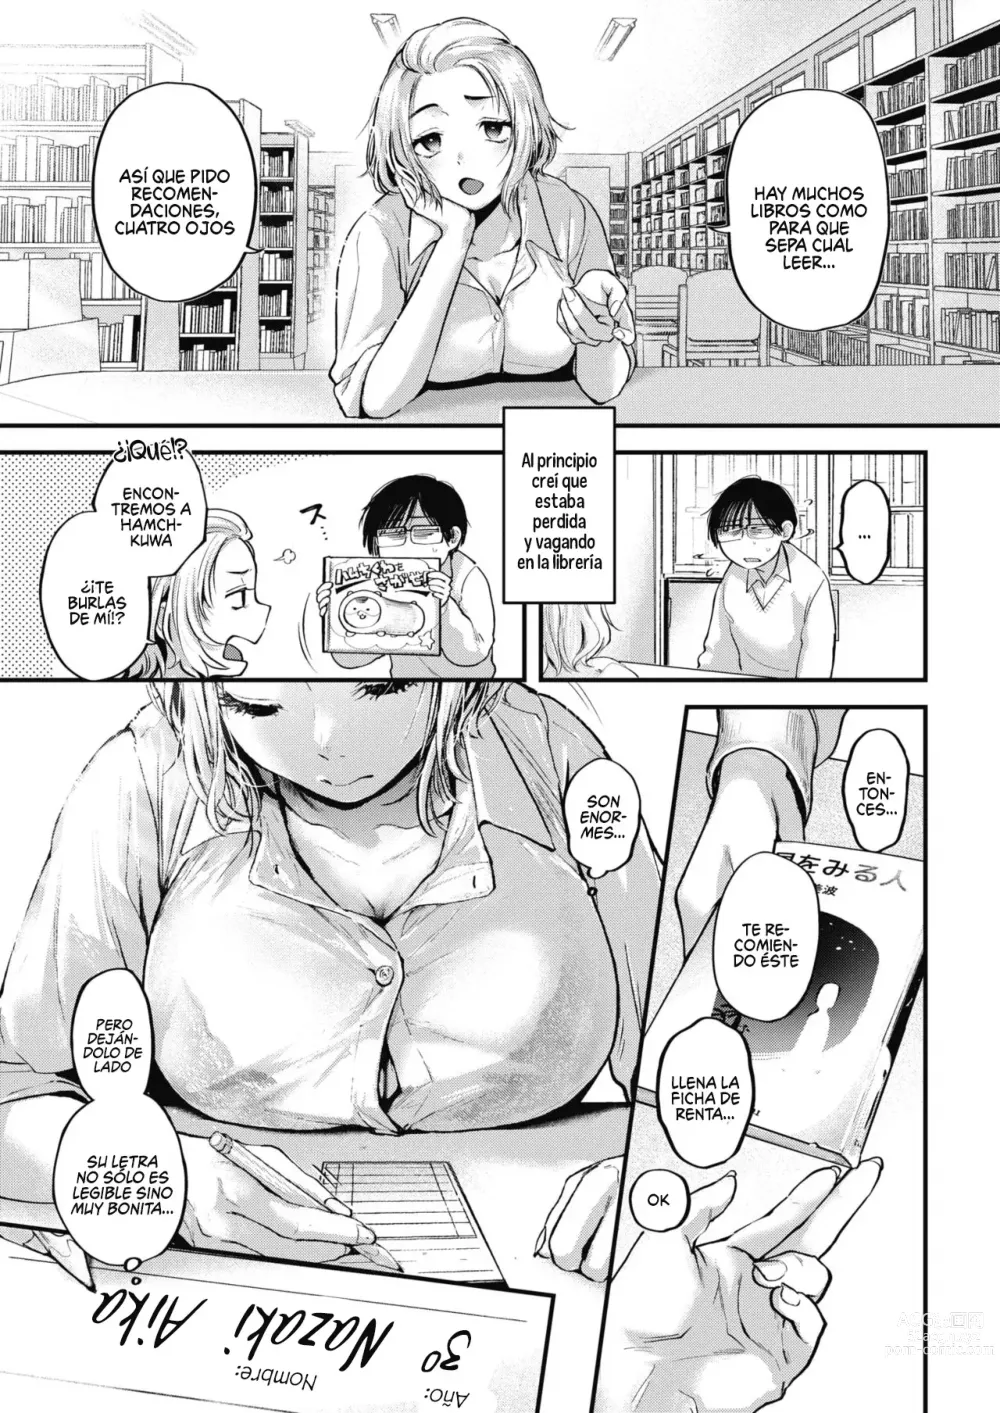 Page 3 of manga Reencuentro nada fortuito